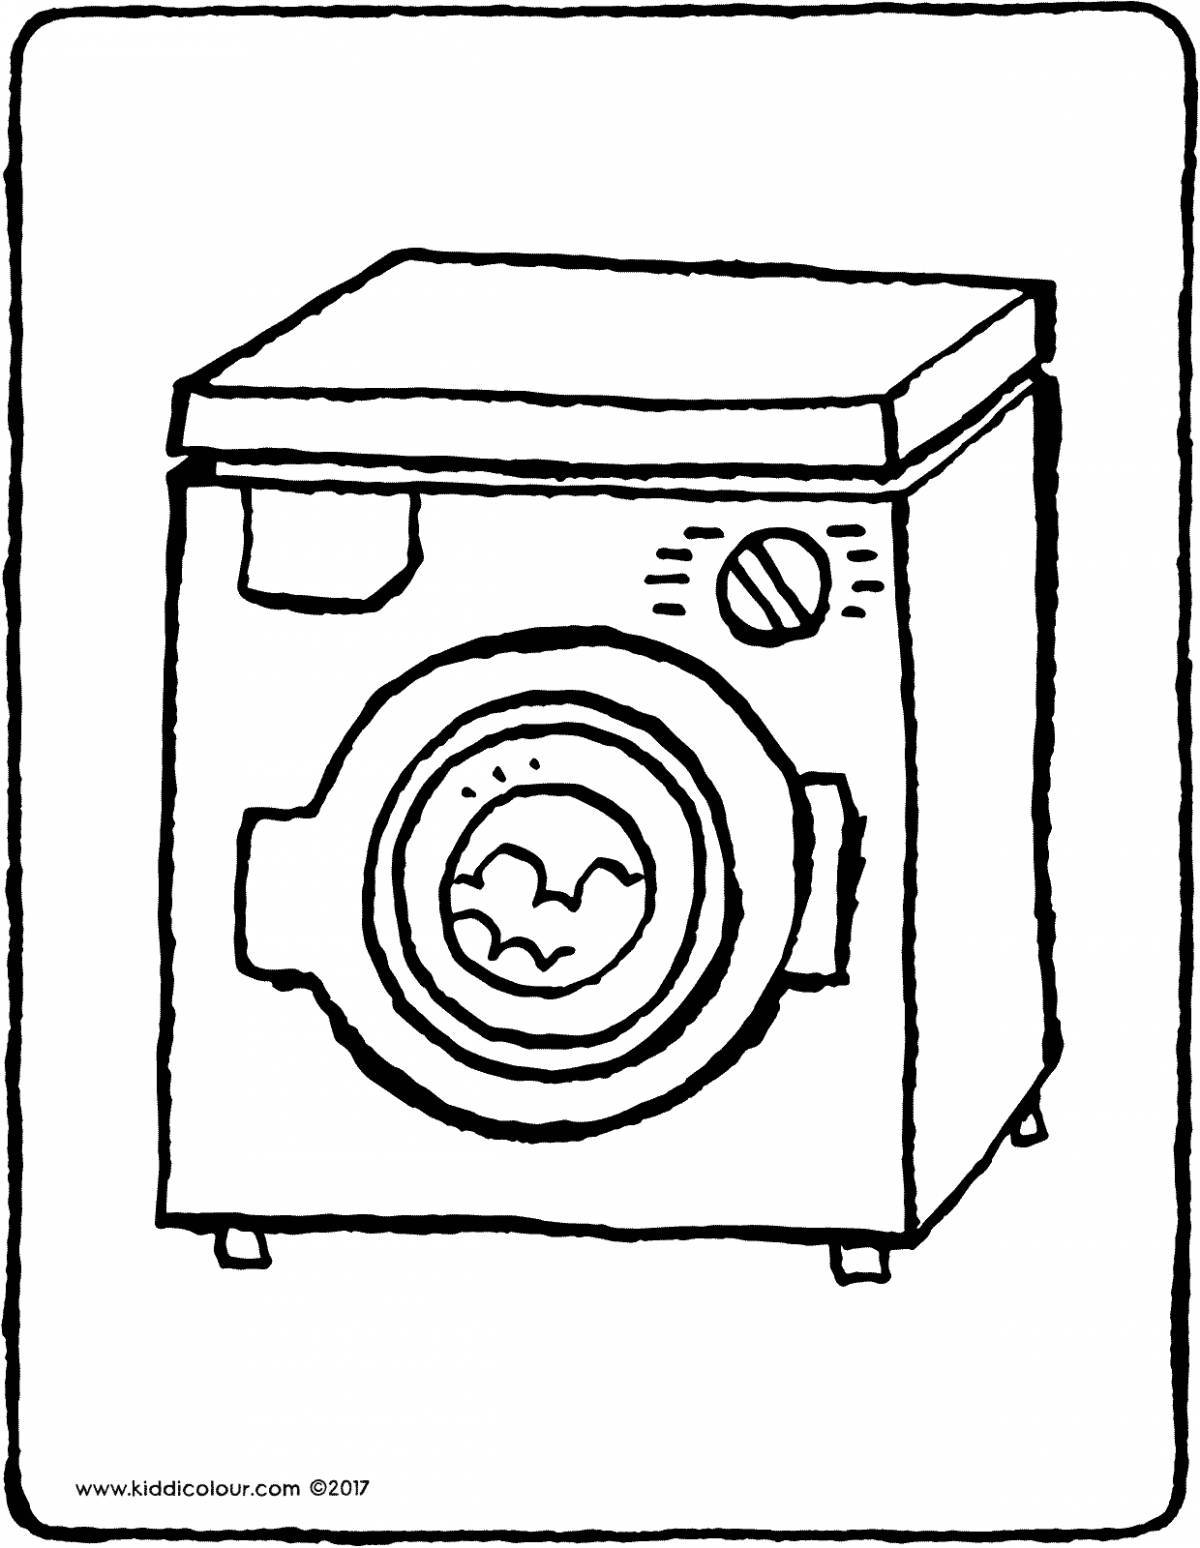 Interesting washing machine coloring page